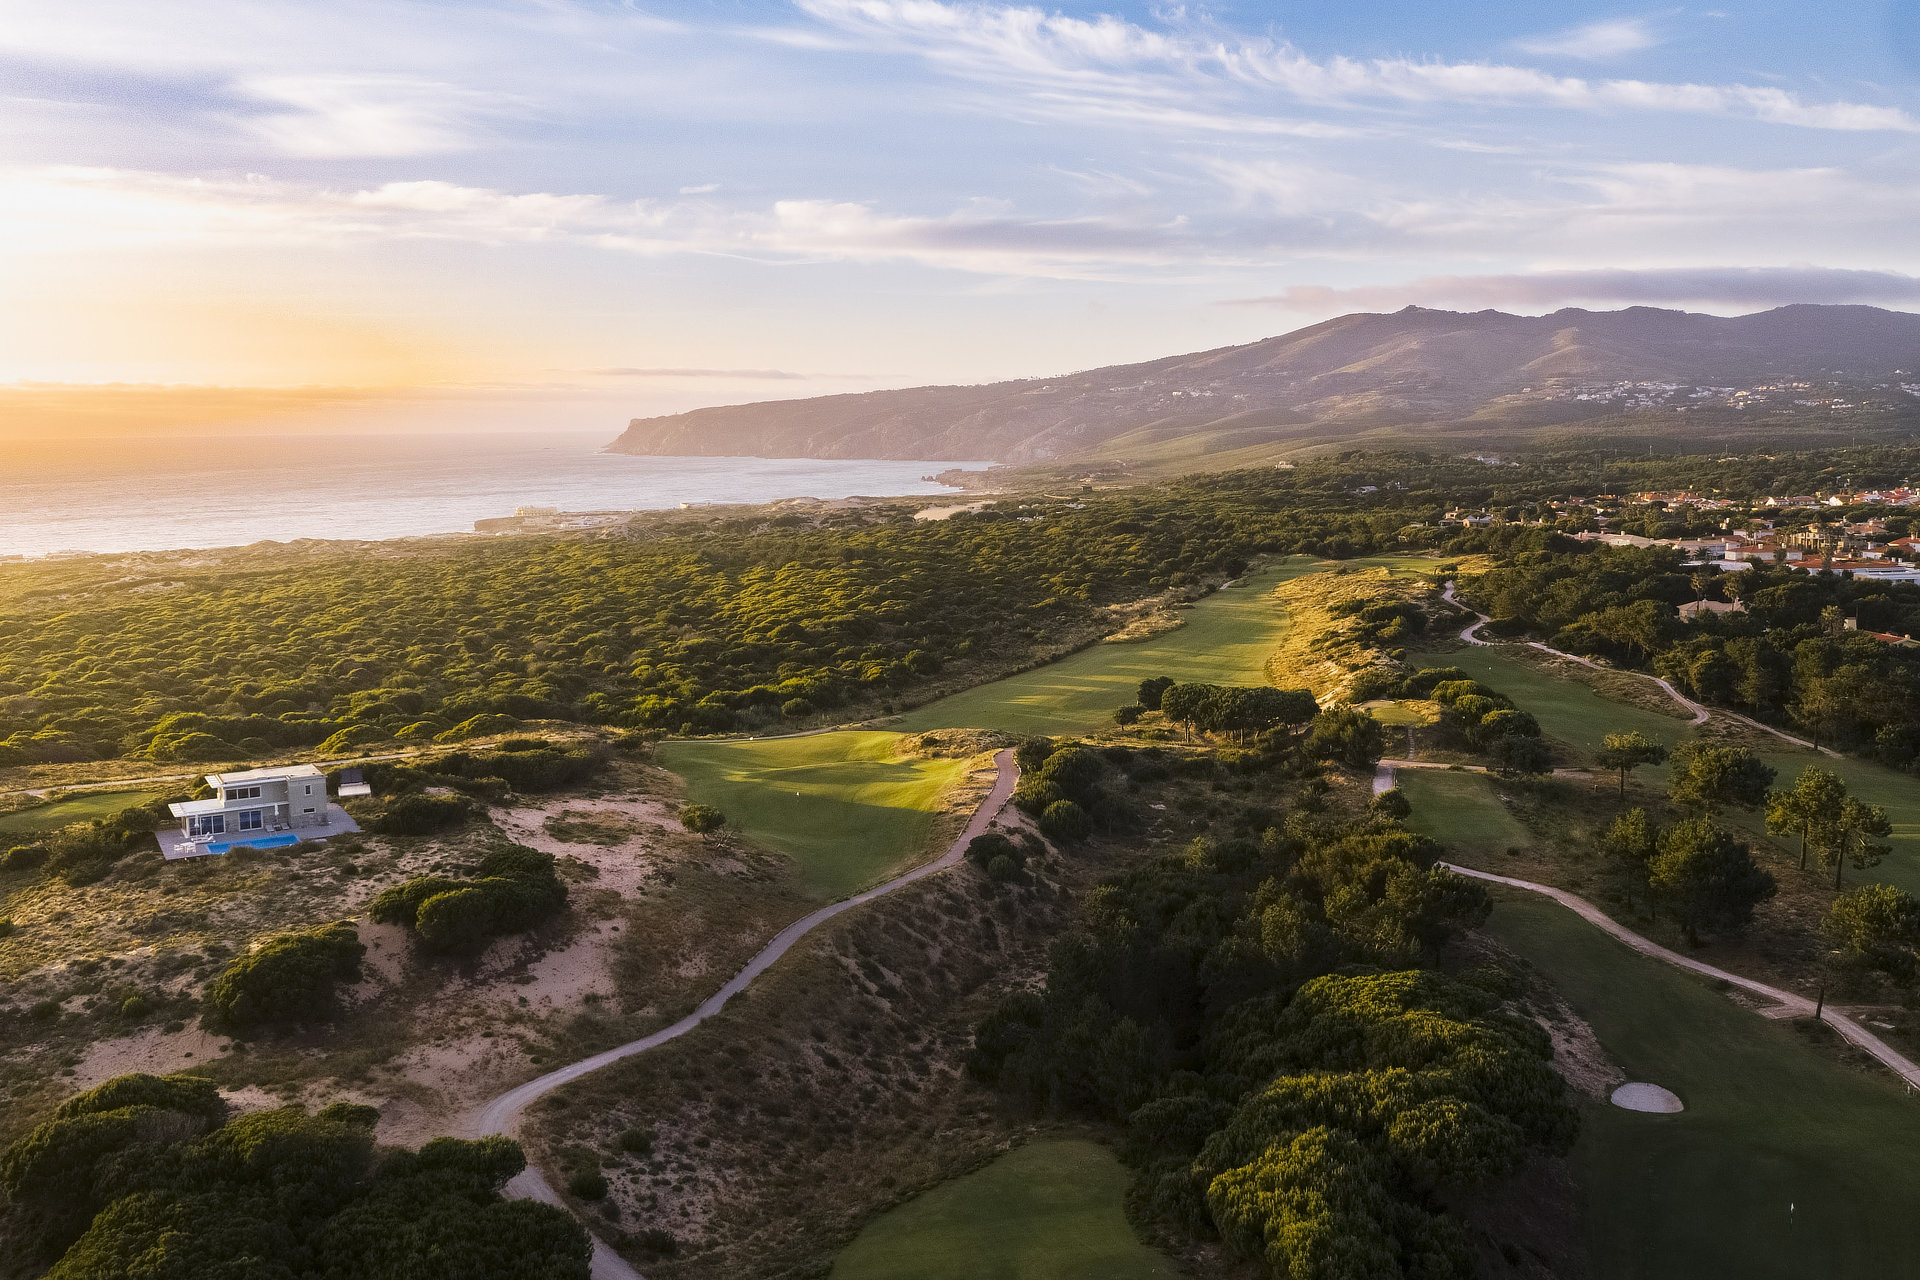 Oitavos Dunes - Portugal's Nº1 Golf Course